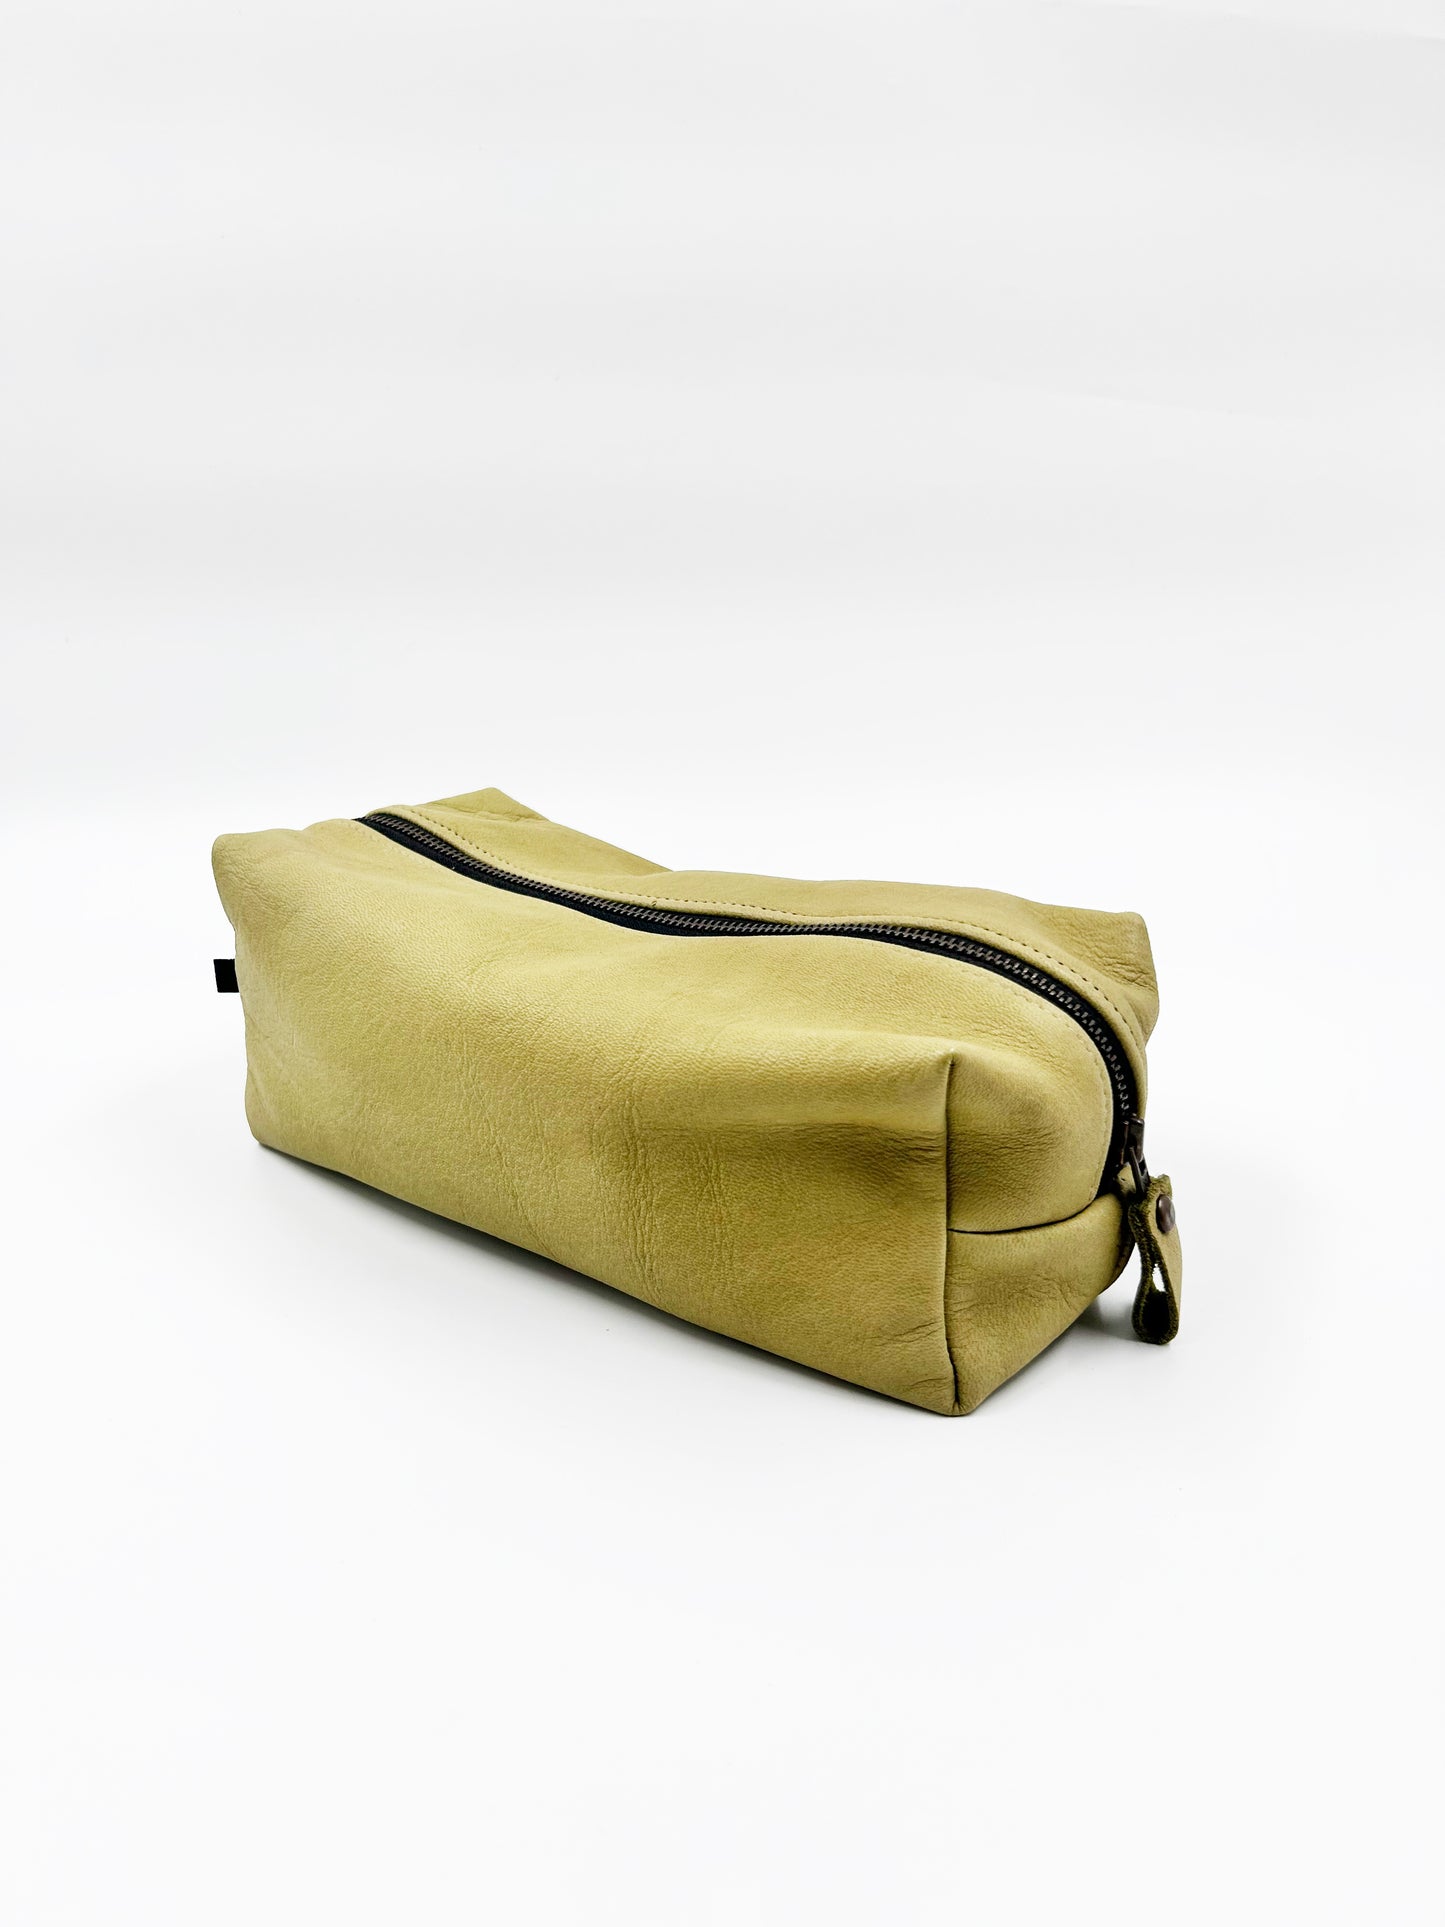 Leather Toiletry Bag/ Dopp Kit